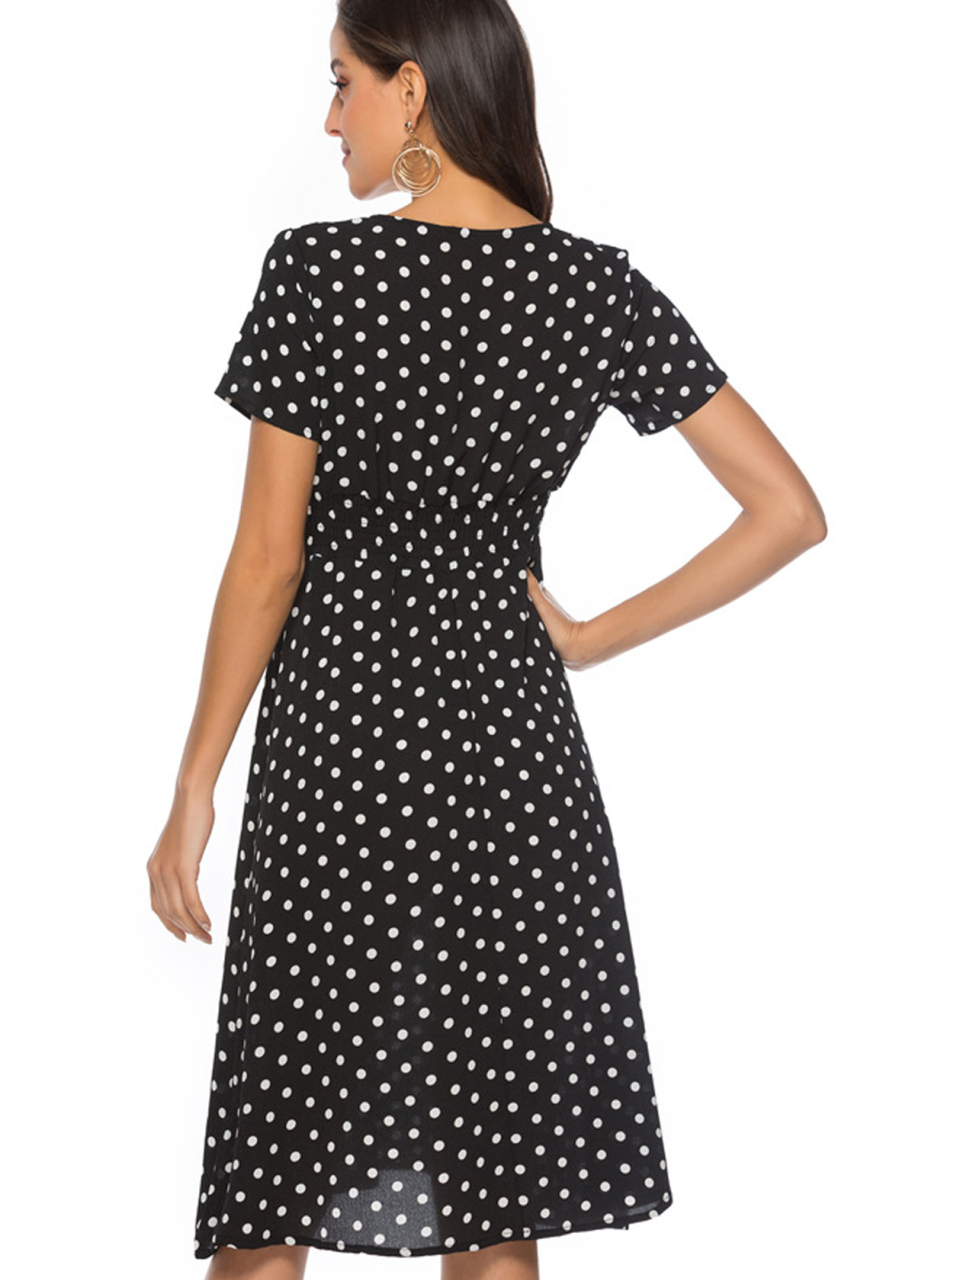 Polka Dot Print V-Neck Short Sleeve Dress